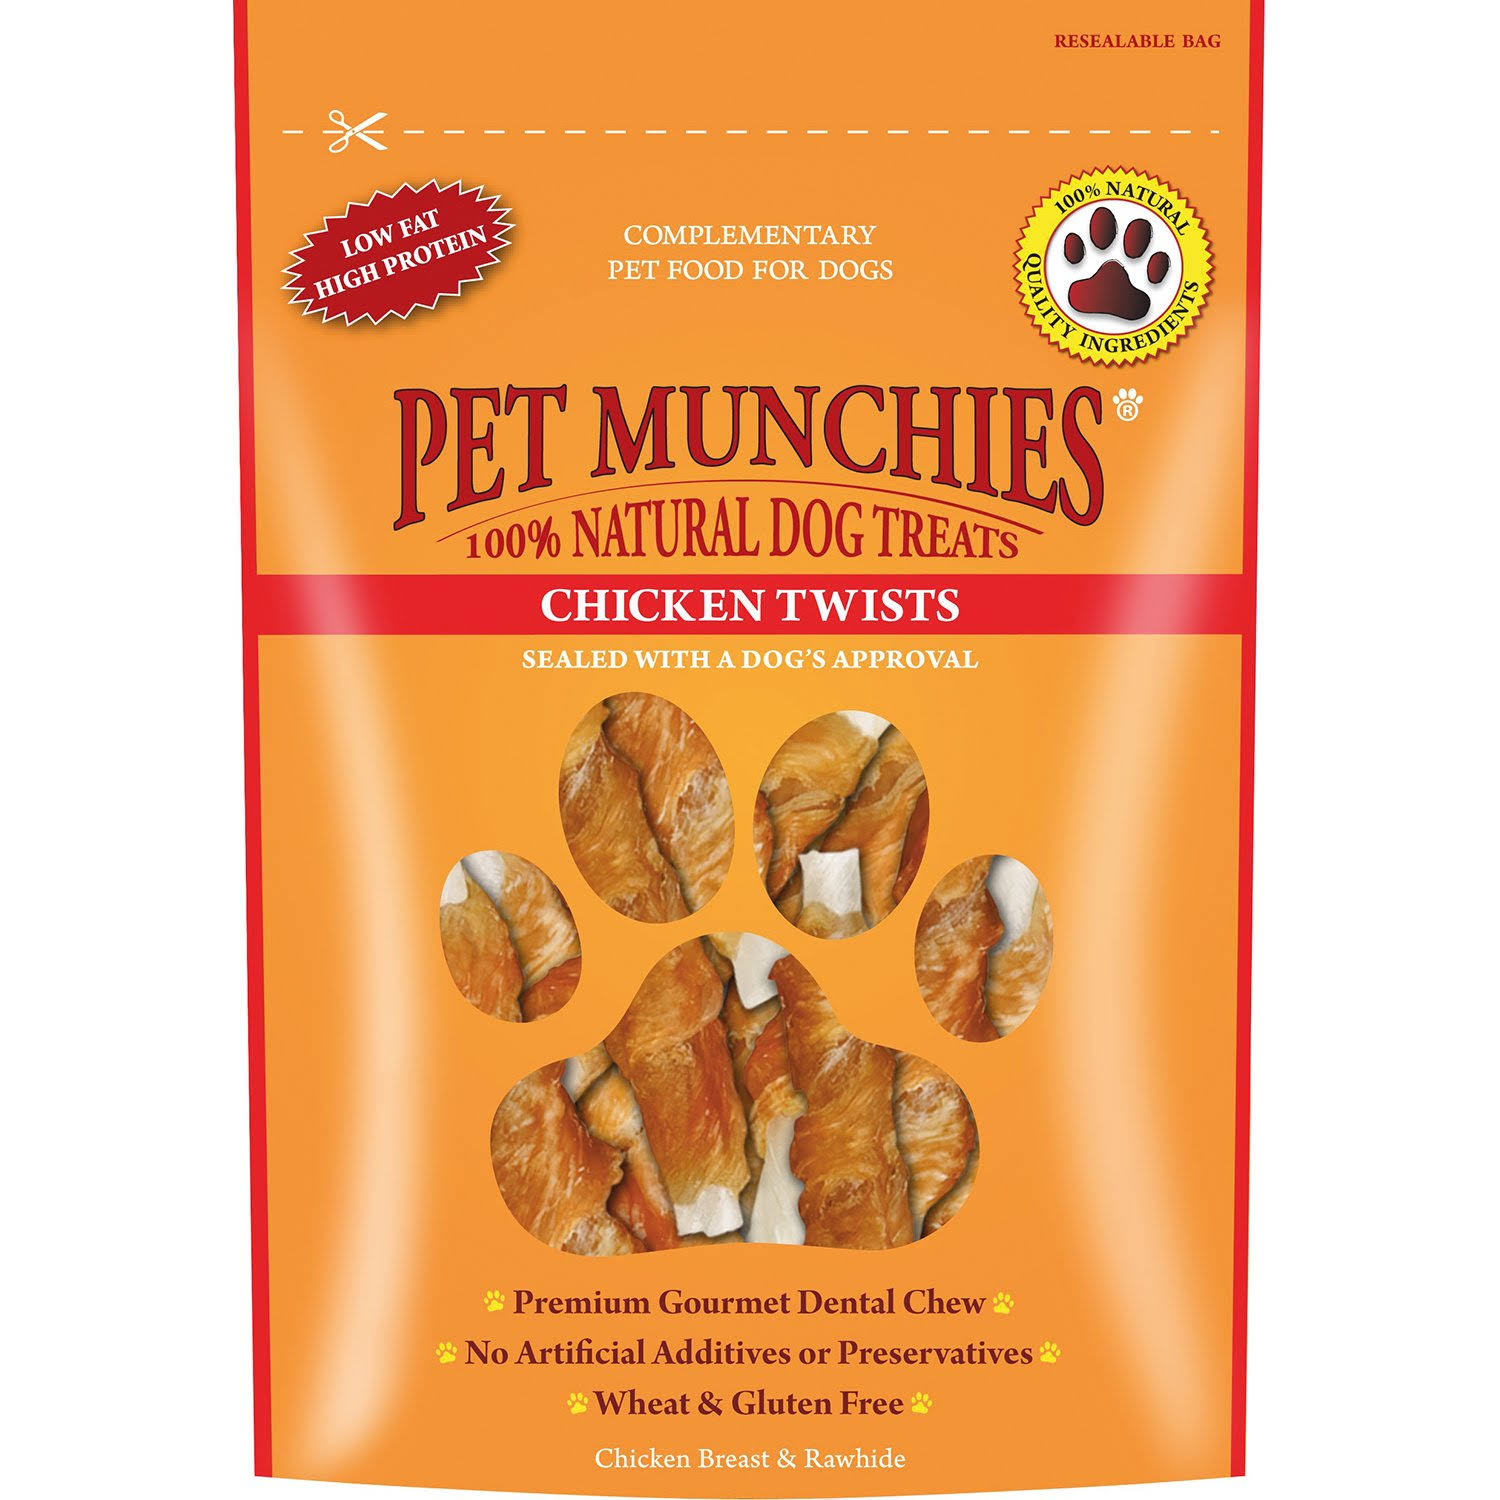 Pet Munchies Dog Treats - Chicken Twists